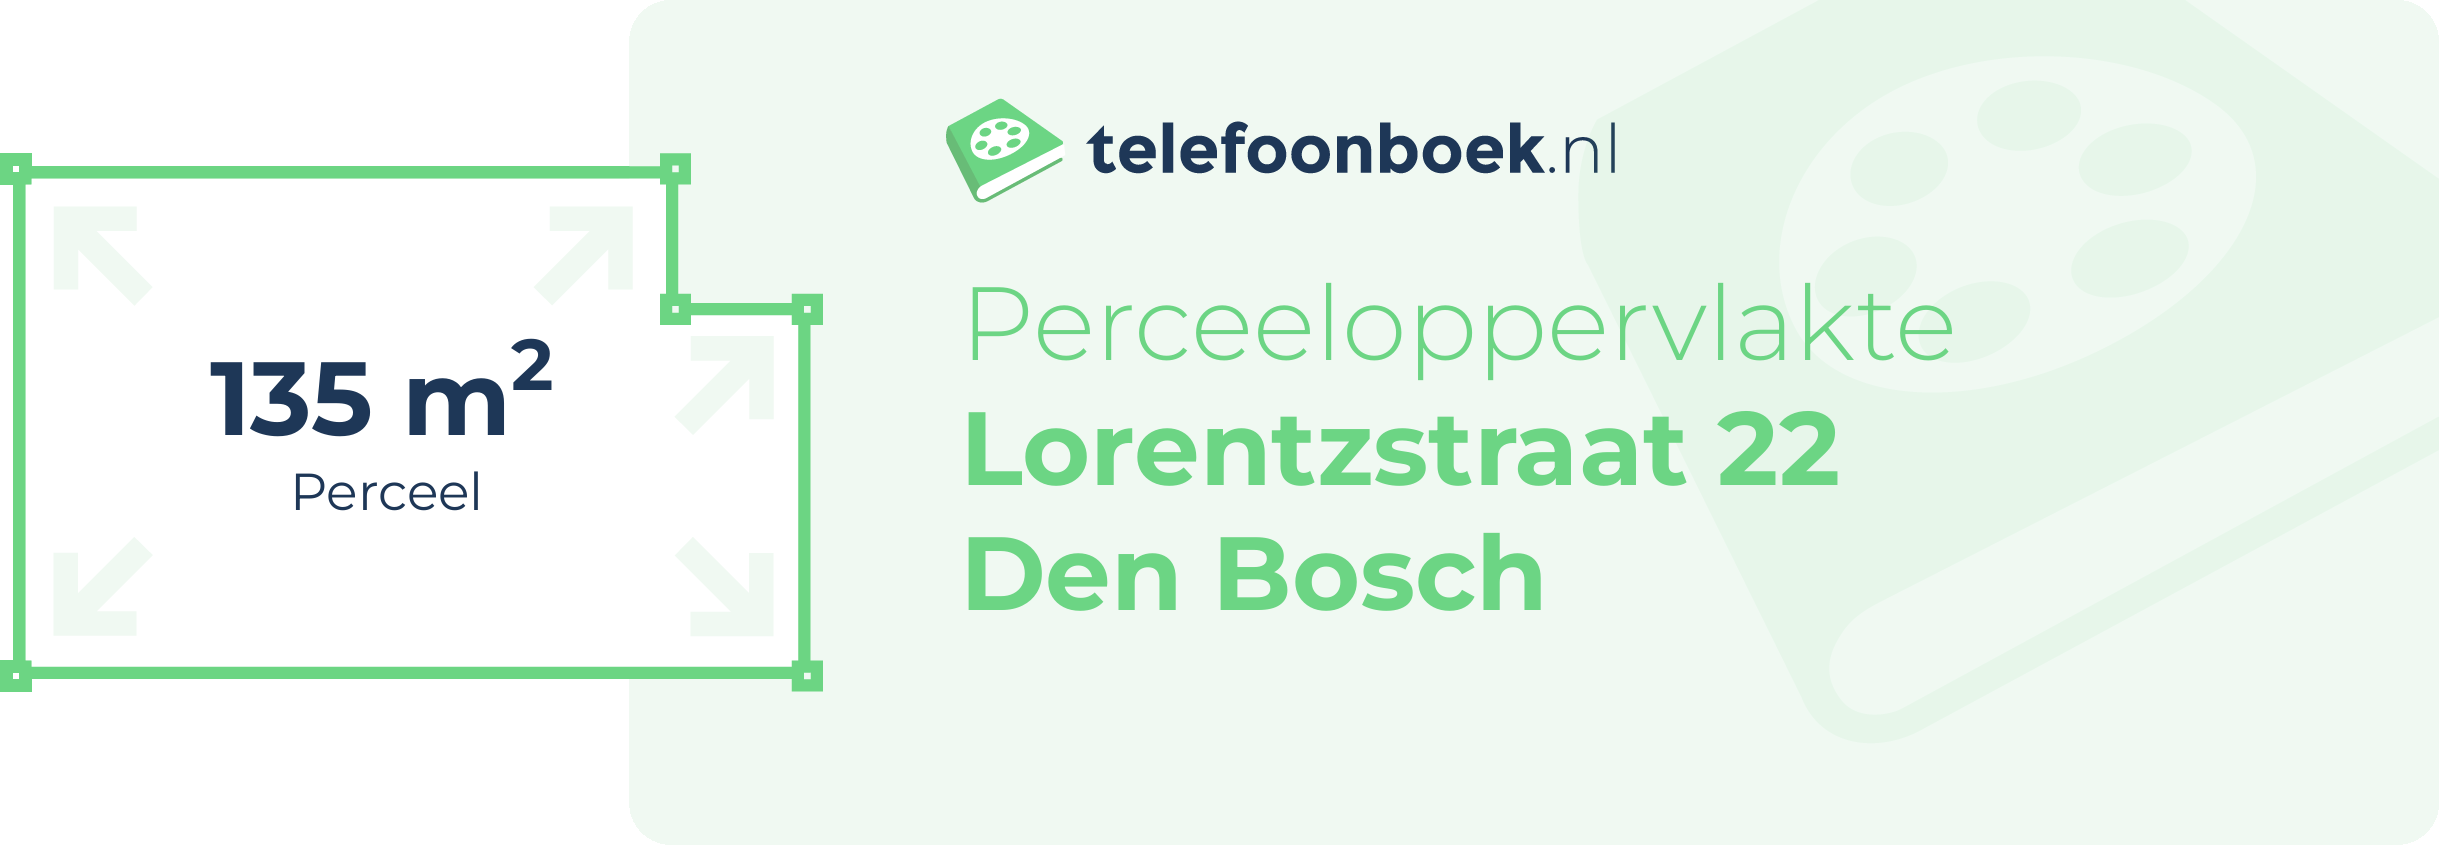 Perceeloppervlakte Lorentzstraat 22 Den Bosch